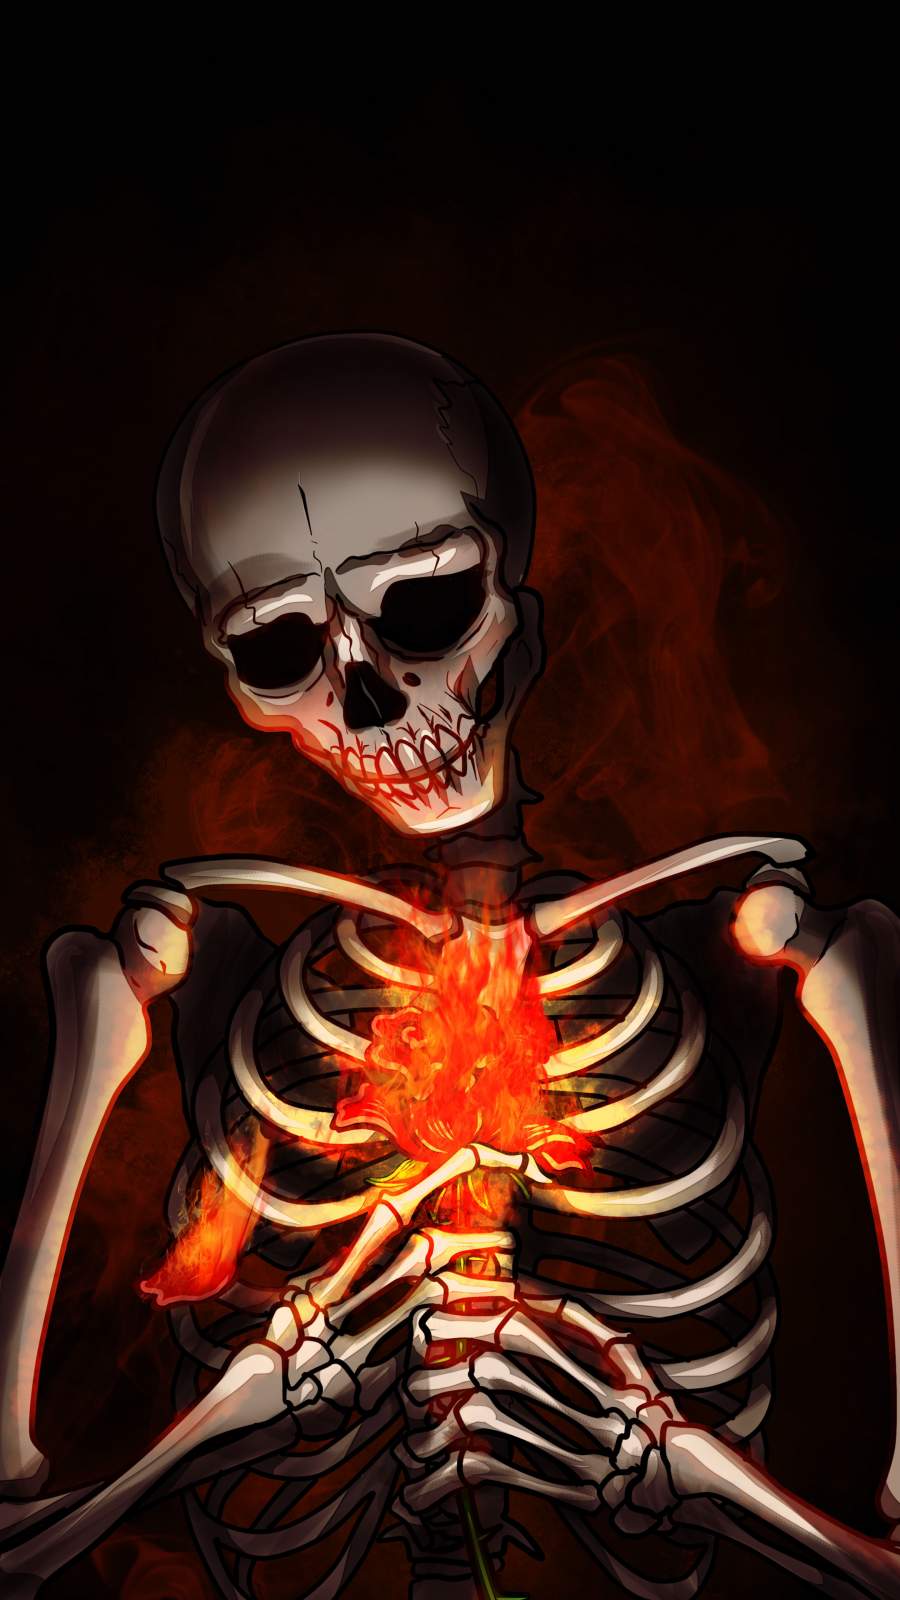 Burning Heart Skeleton IPhone Wallpaper Wallpaper, iPhone Wallpaper